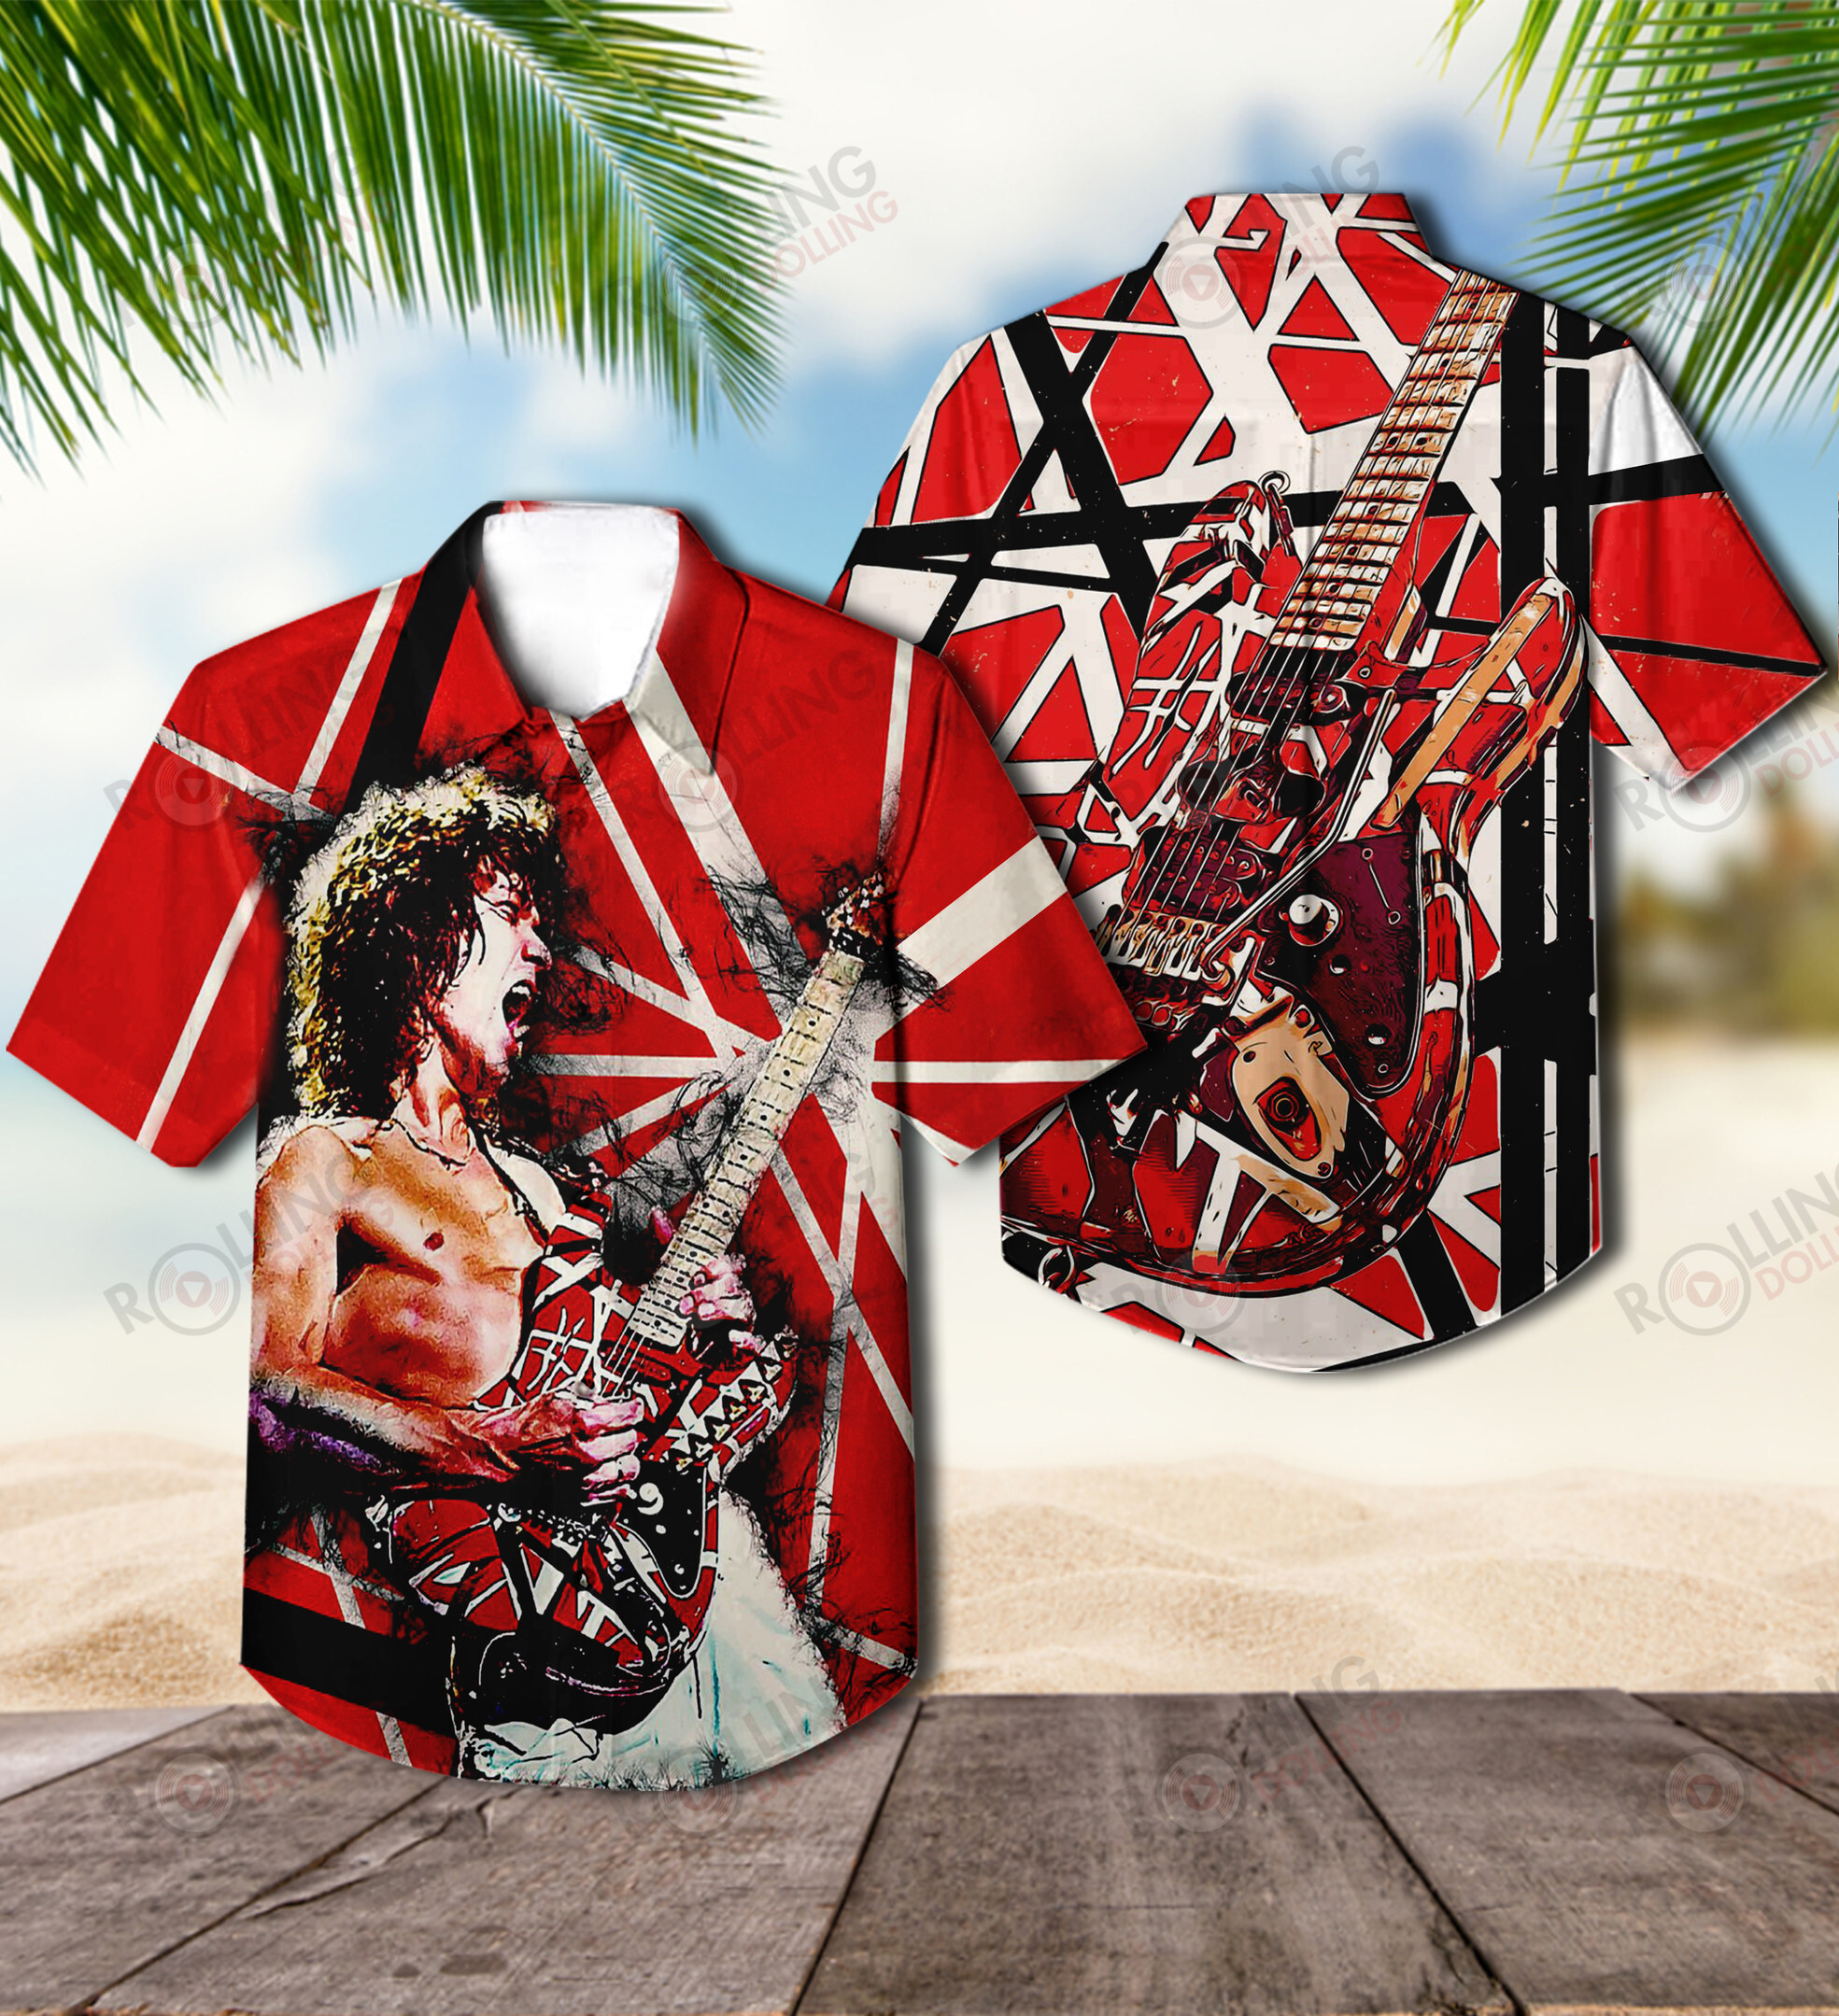 HOT Van Halen Electric Guitar Album Tropical Shirt1